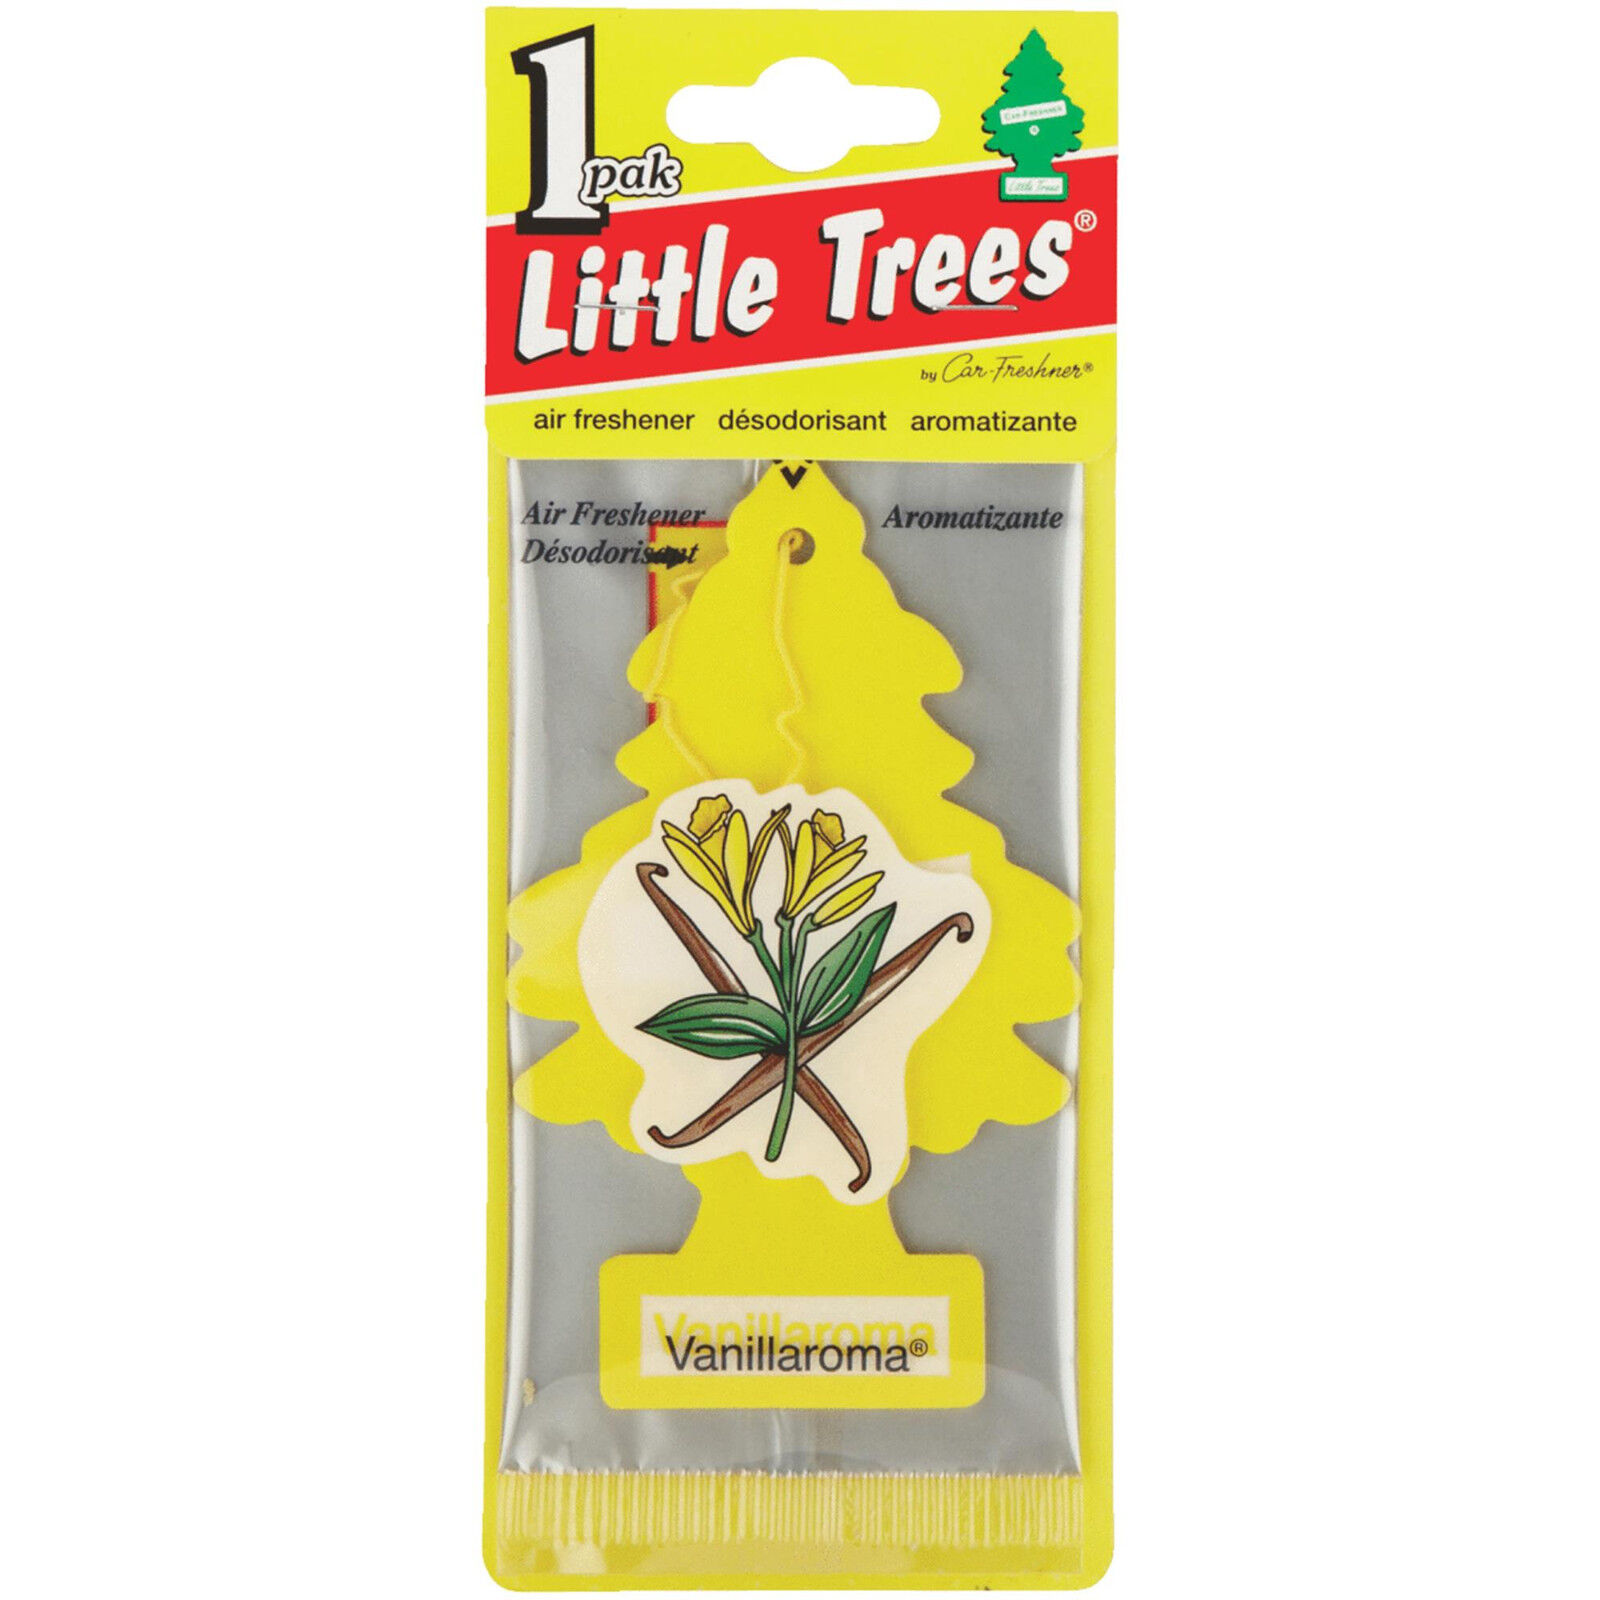  Freshener Vanillaroma  10105 Little Tree Vanilla Aroma  MADE IN USA Pack (24)  Little Trees U1P-10105 - фотография #7